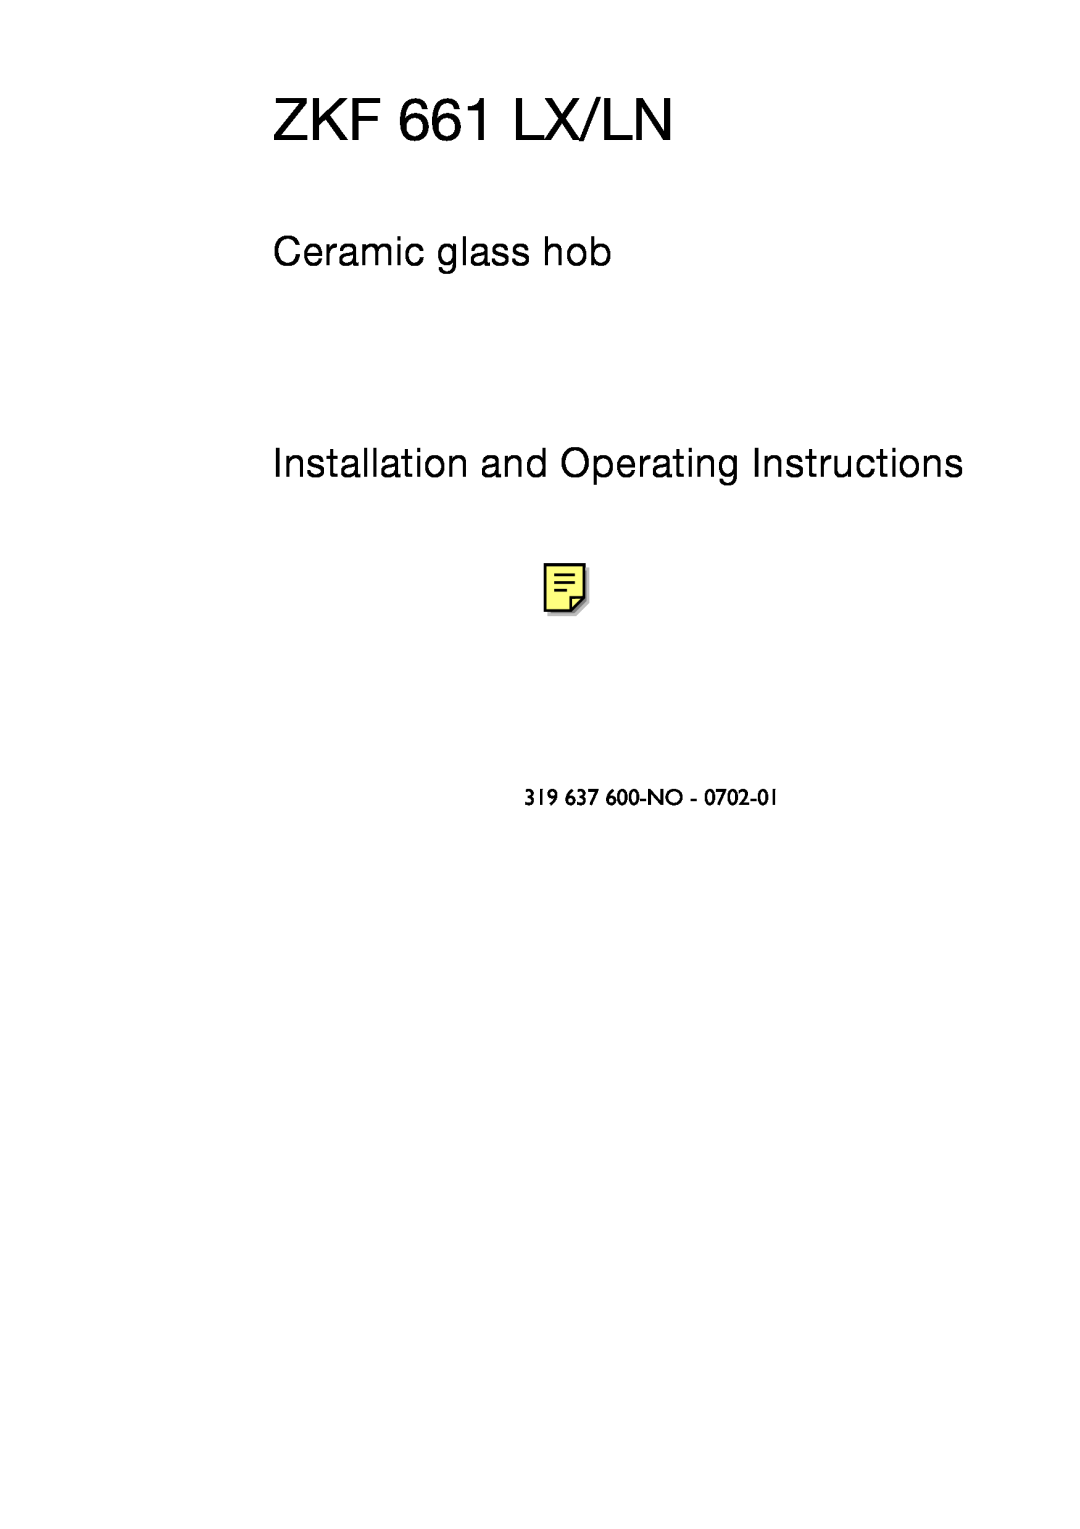 Zanussi ZKF 661 LN manual Ceramic glass hob, Installation and Operating Instructions, ZKF 661 LX/LN 